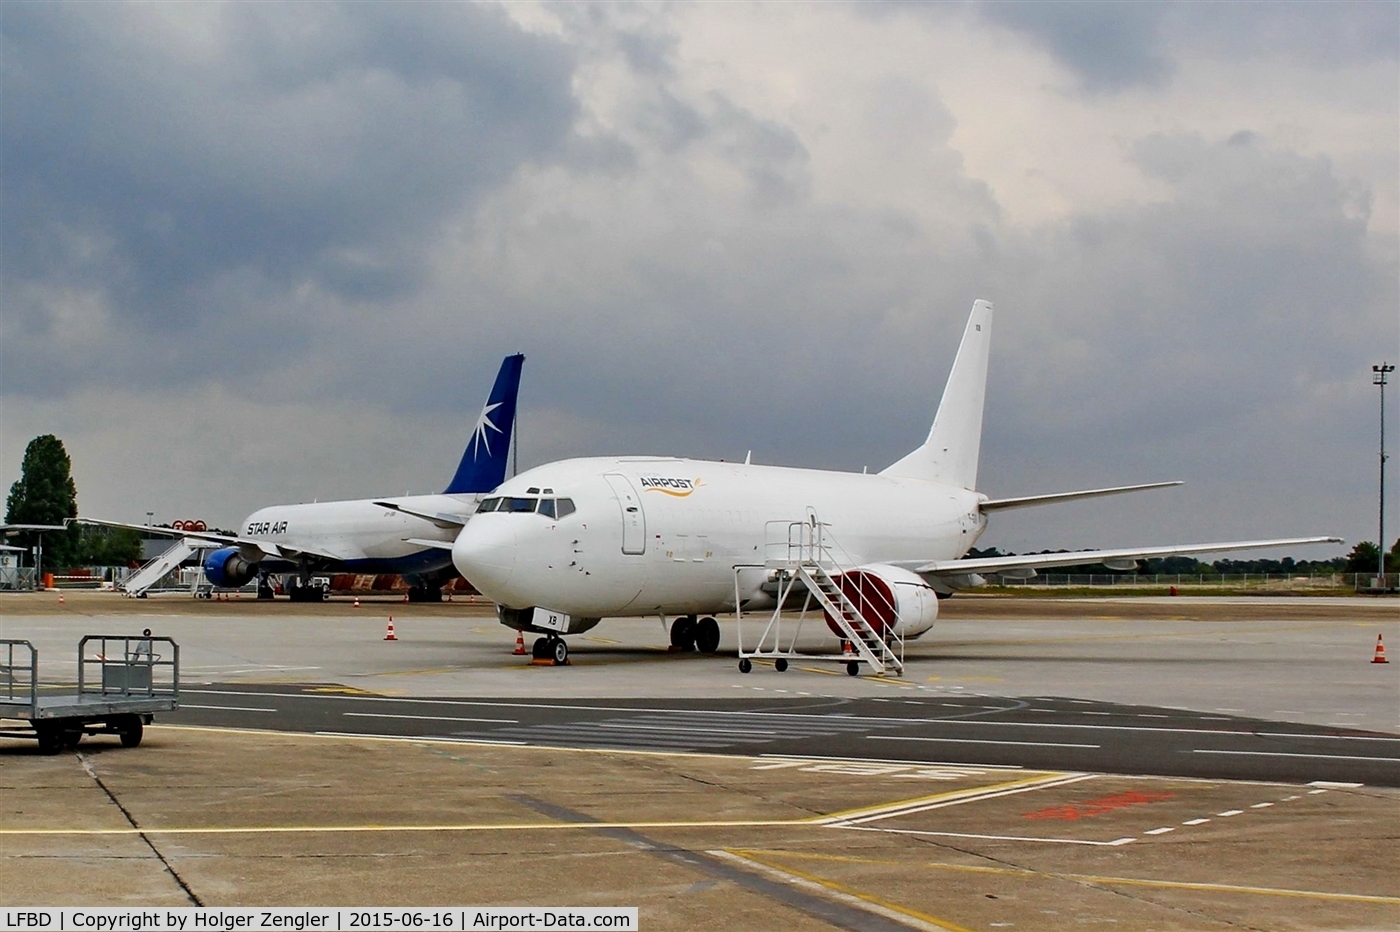 Bordeaux Airport, Merignac Airport France (LFBD) - Cargo apron south of terminal building......